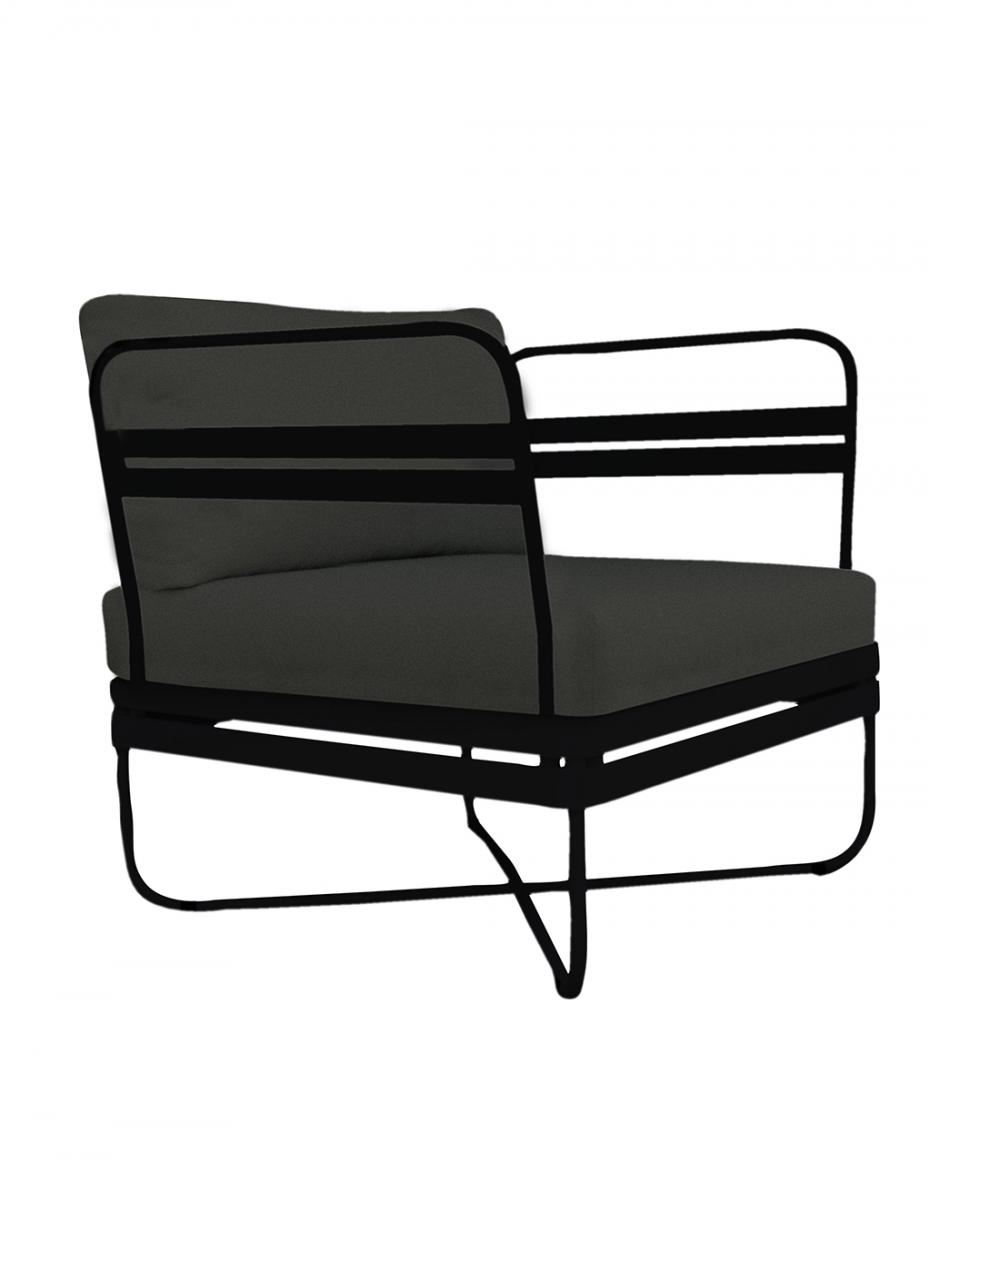 Bris Outdoor Chair Black Outdoor Chair Black